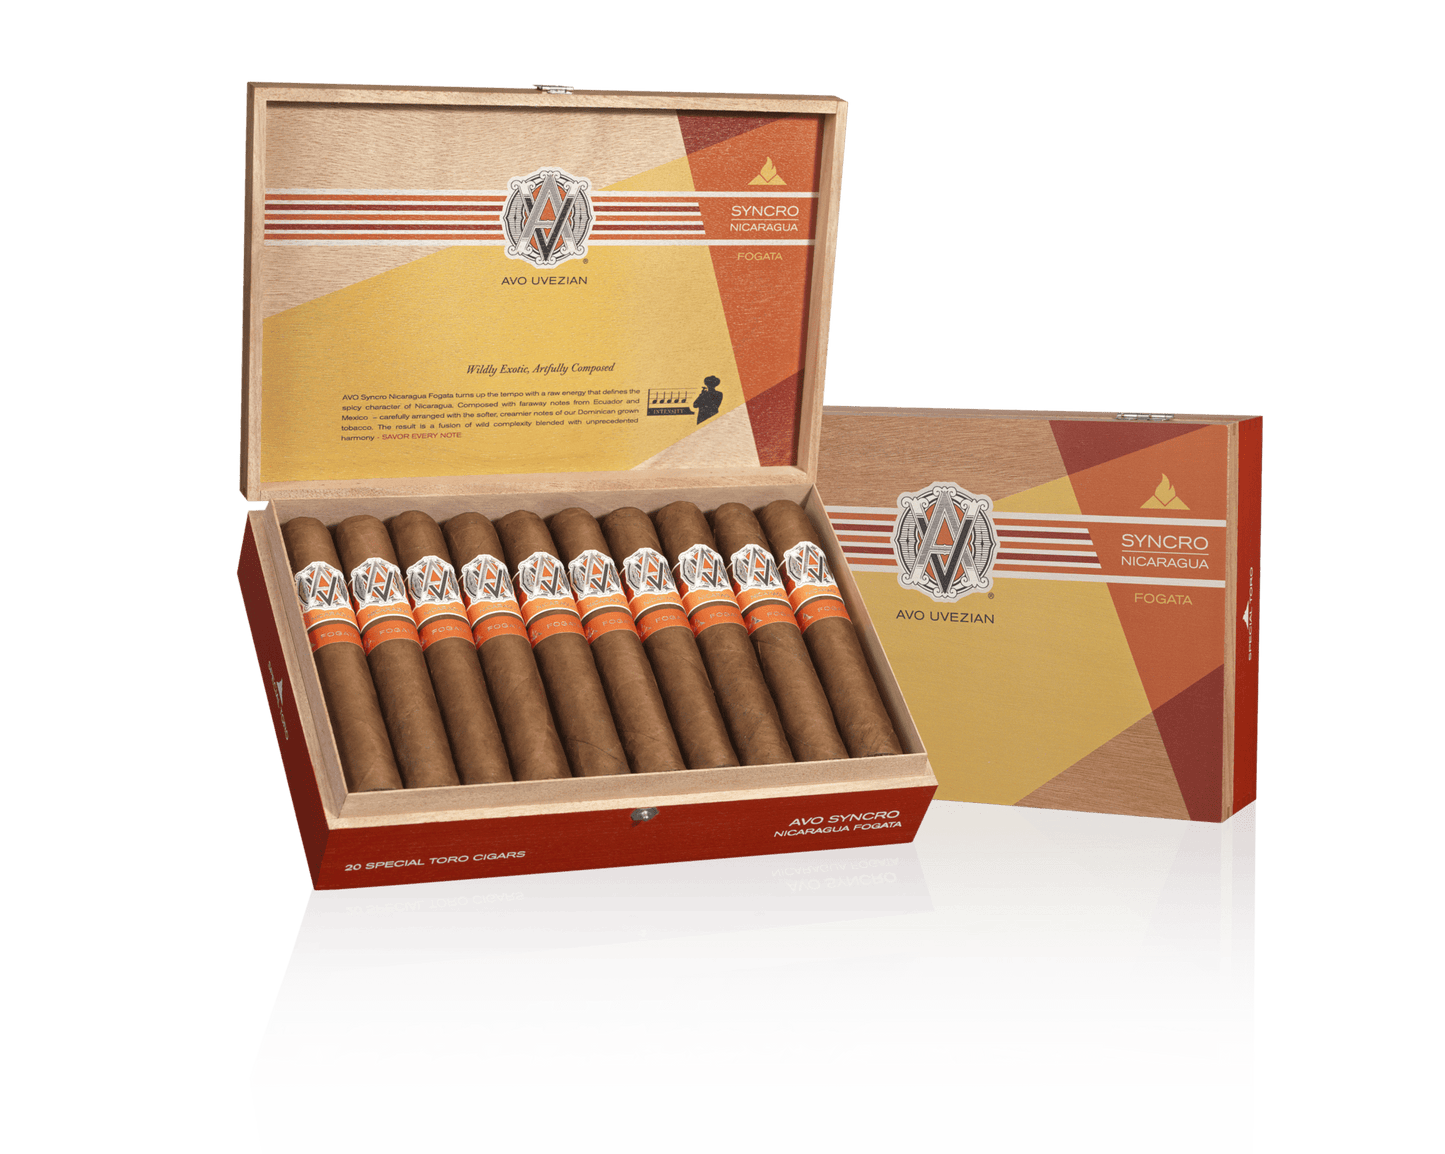 avo syncro fogata full box and single cigar